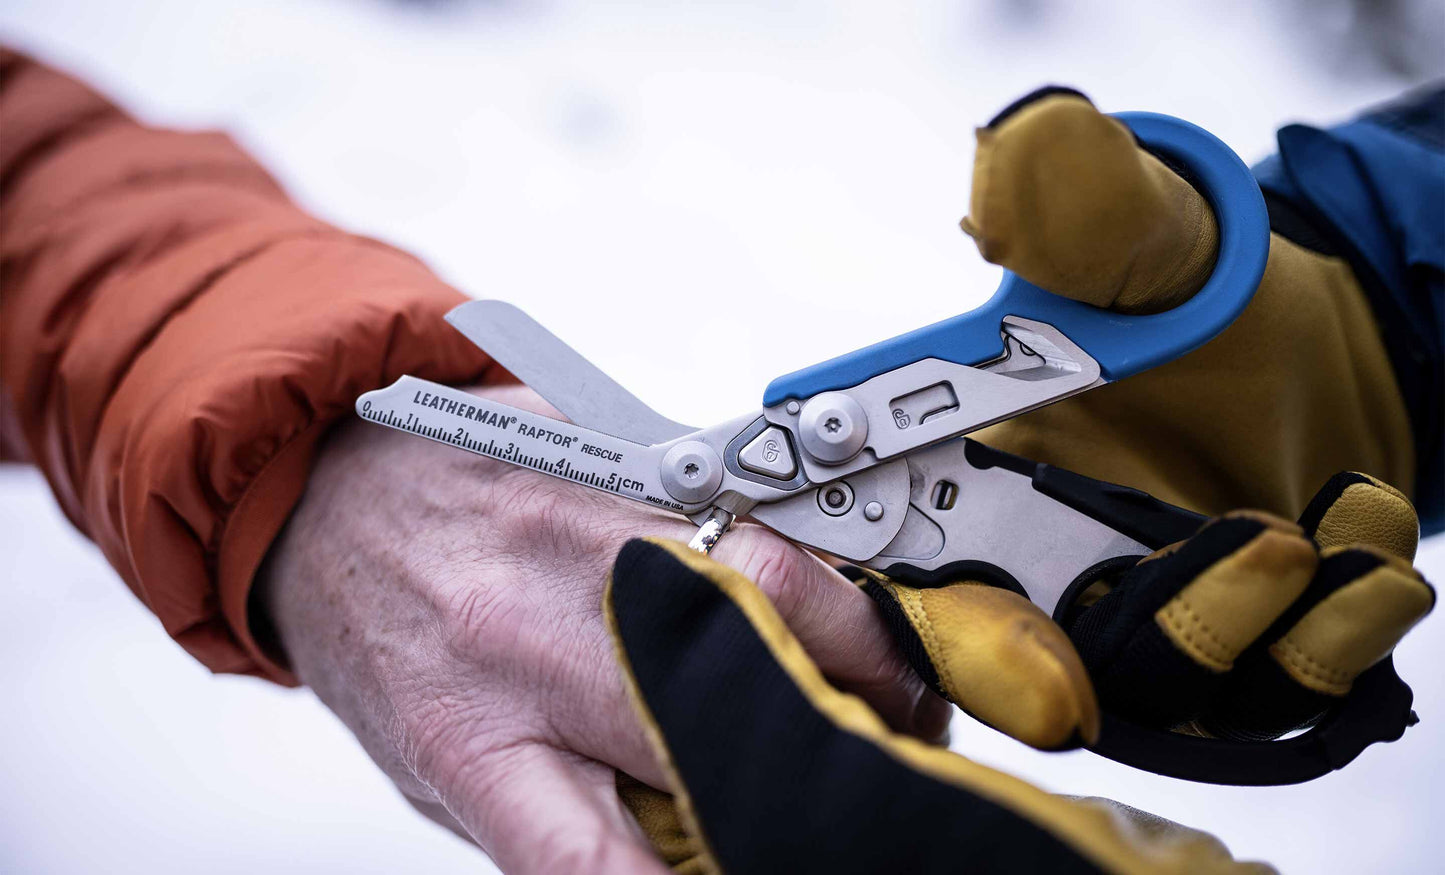 Leatherman RAPTOR® 緊急救援剪刀：一種工具應對多種緊急情況